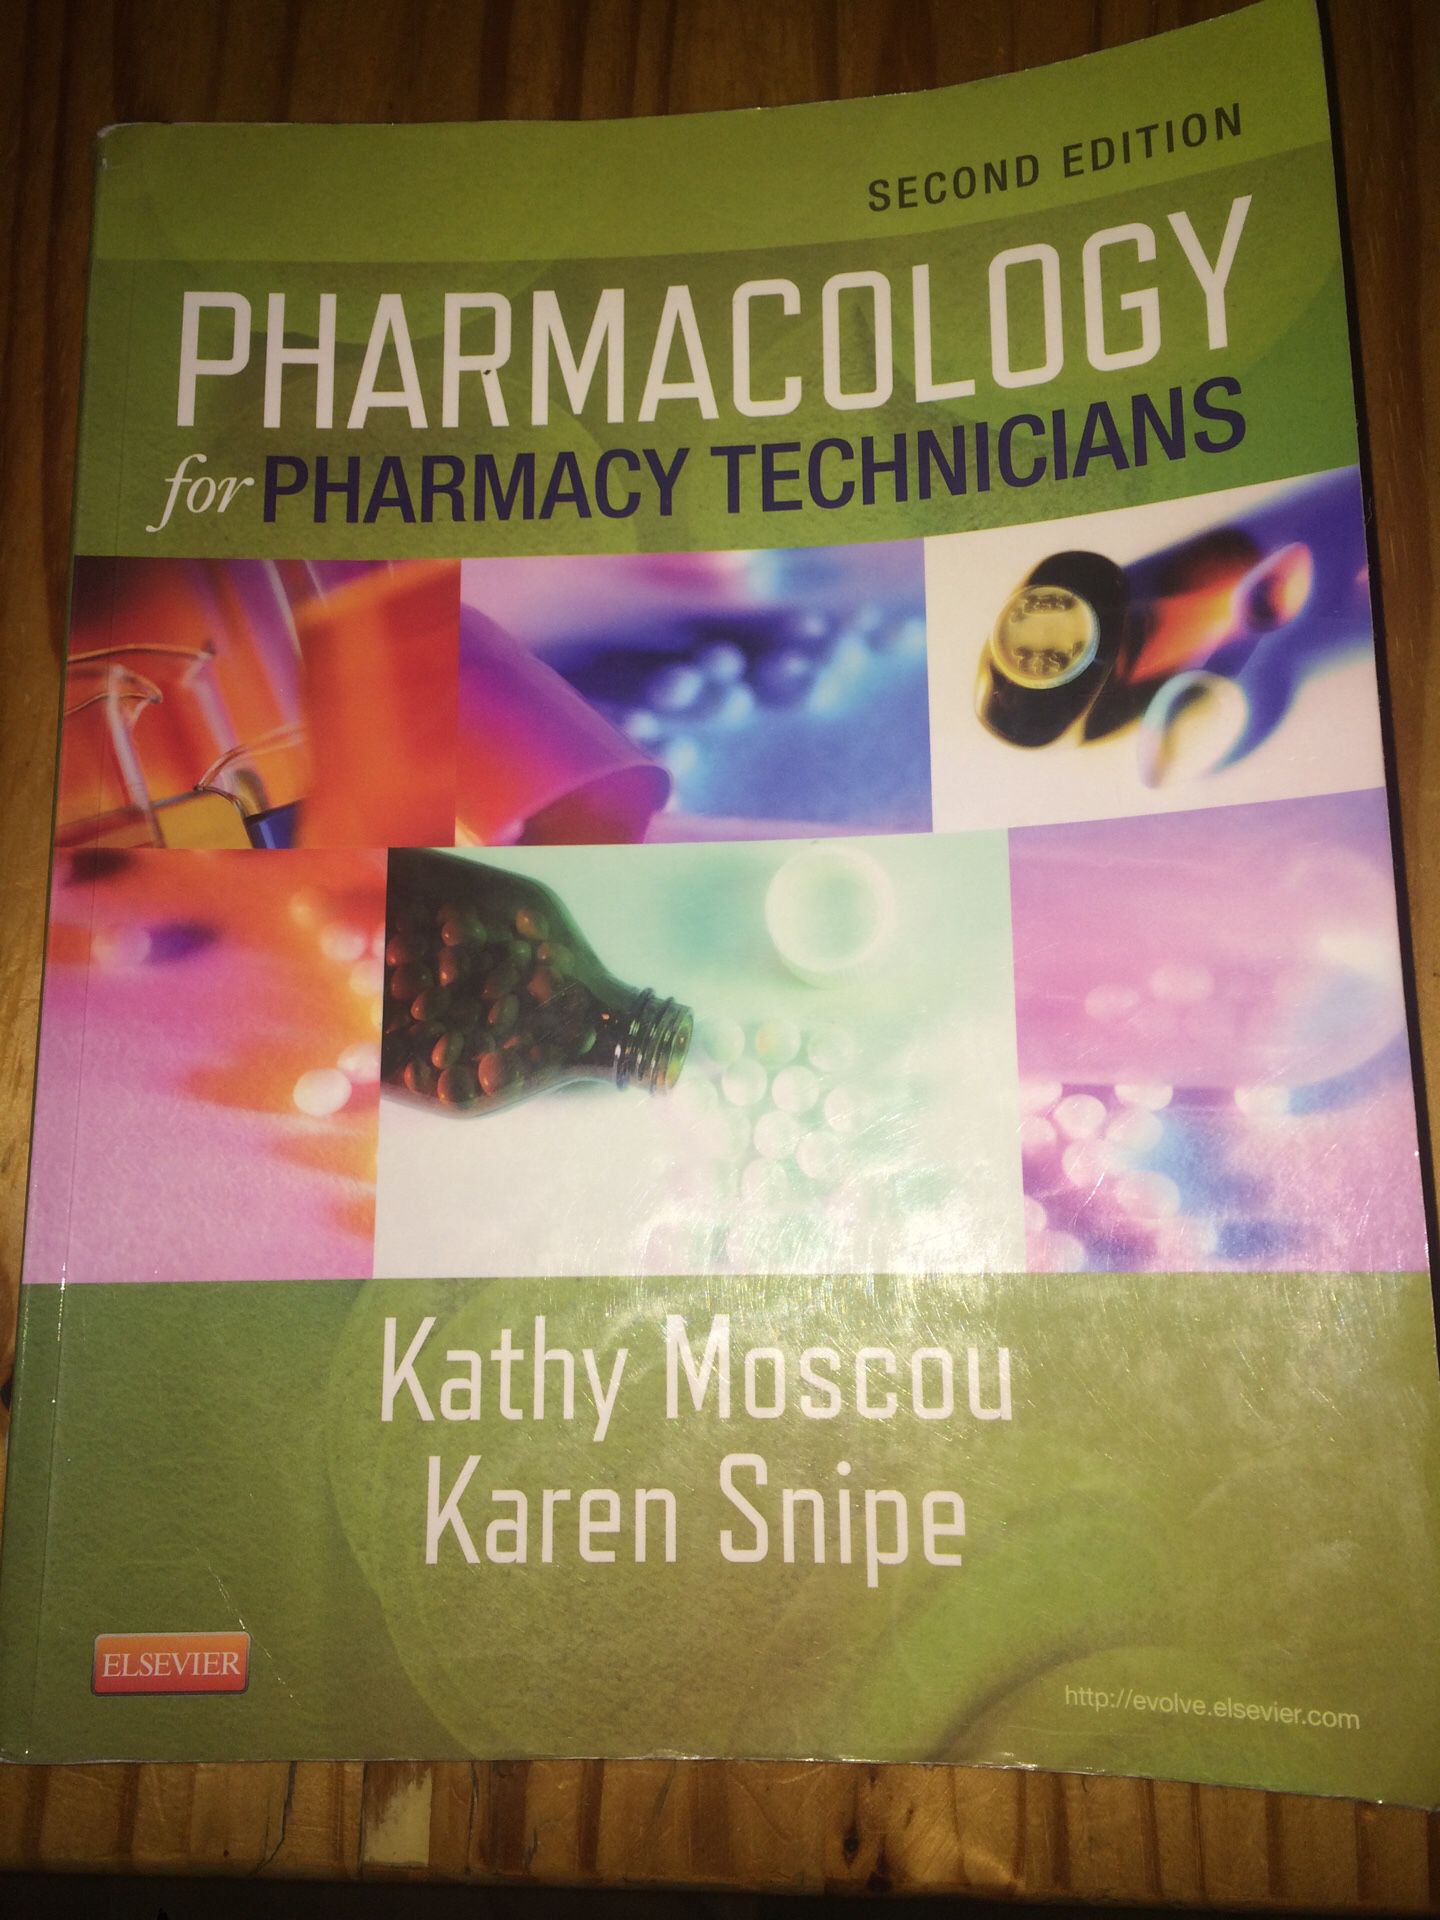 Pharmacy book